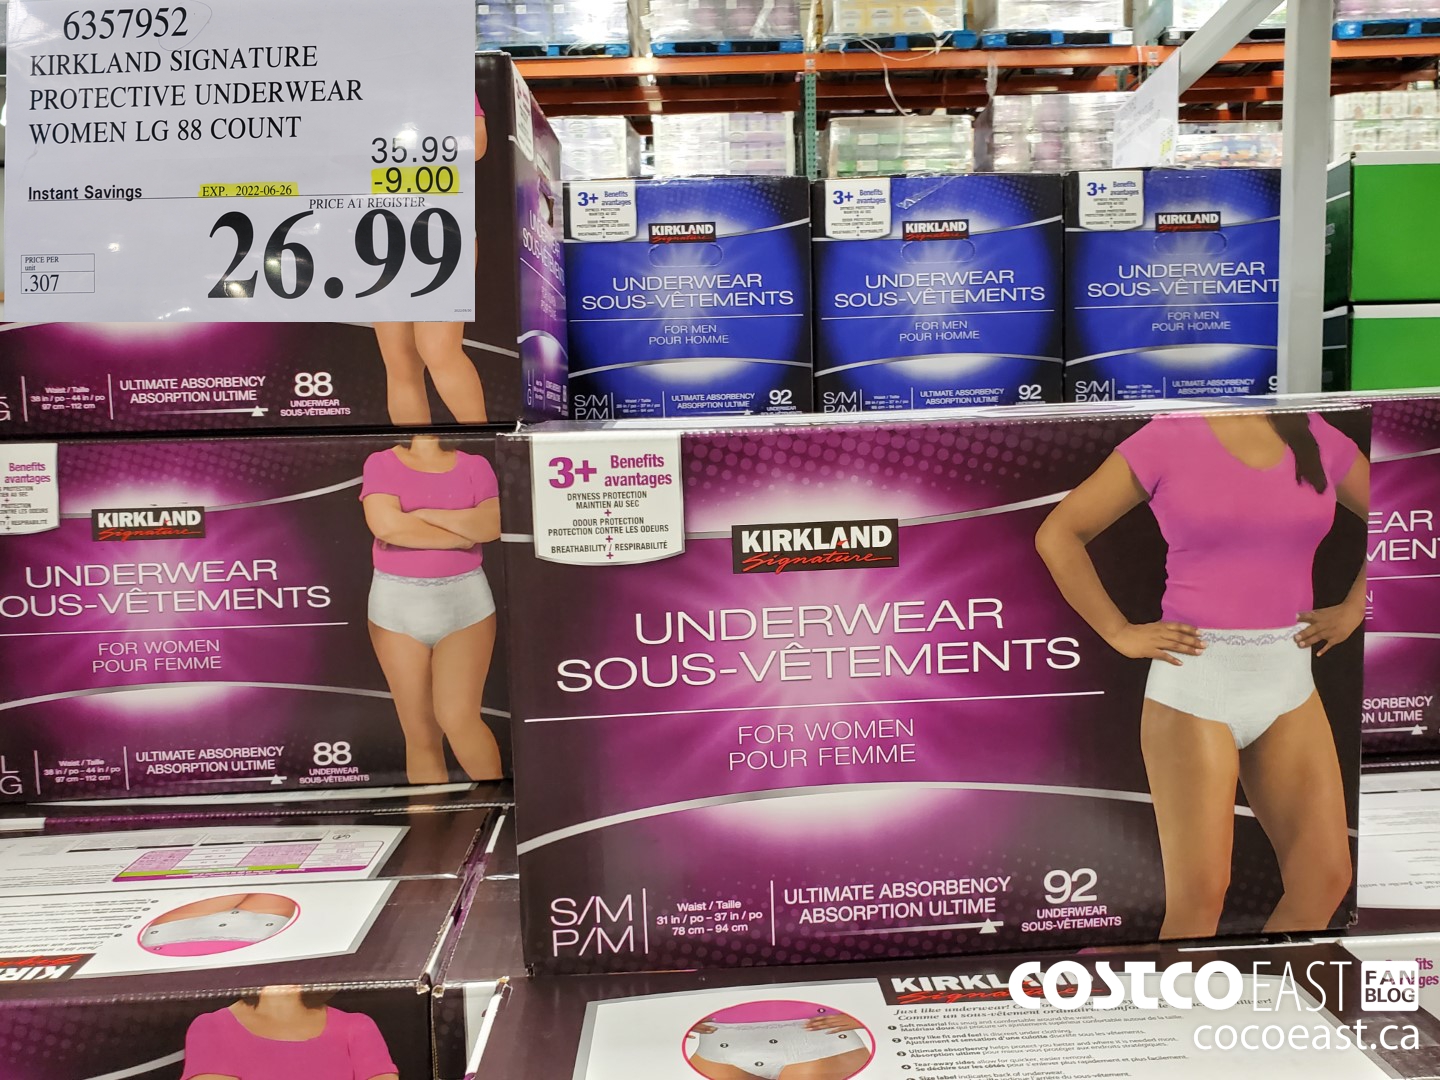 Kirkland Signature Women's Protective Underwear Small/Medium 92-pack -  Deliver-Grocery Online (DG), 9354-2793 Québec Inc.